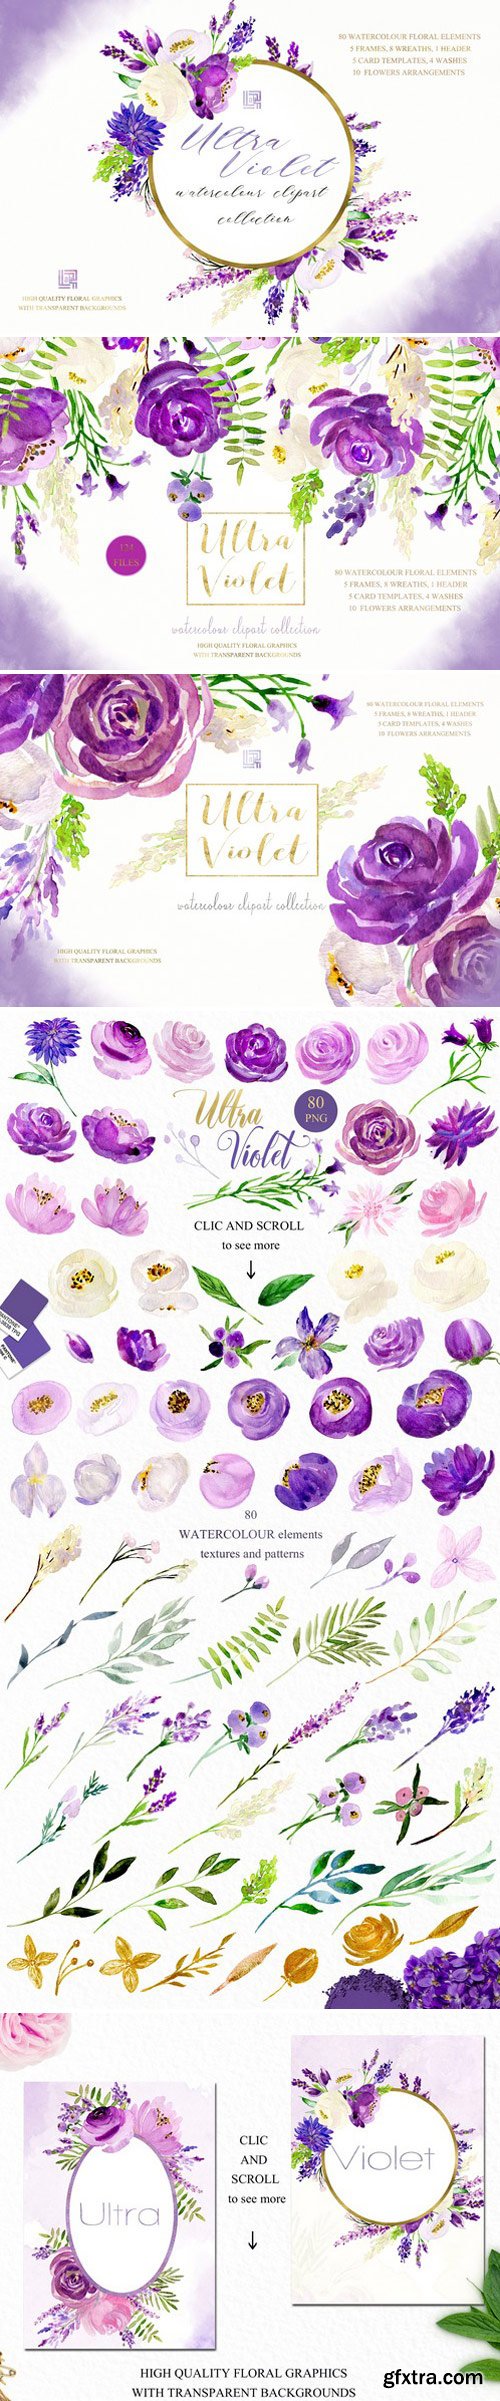 CM - Ultra violet watercolor flowers 2257826